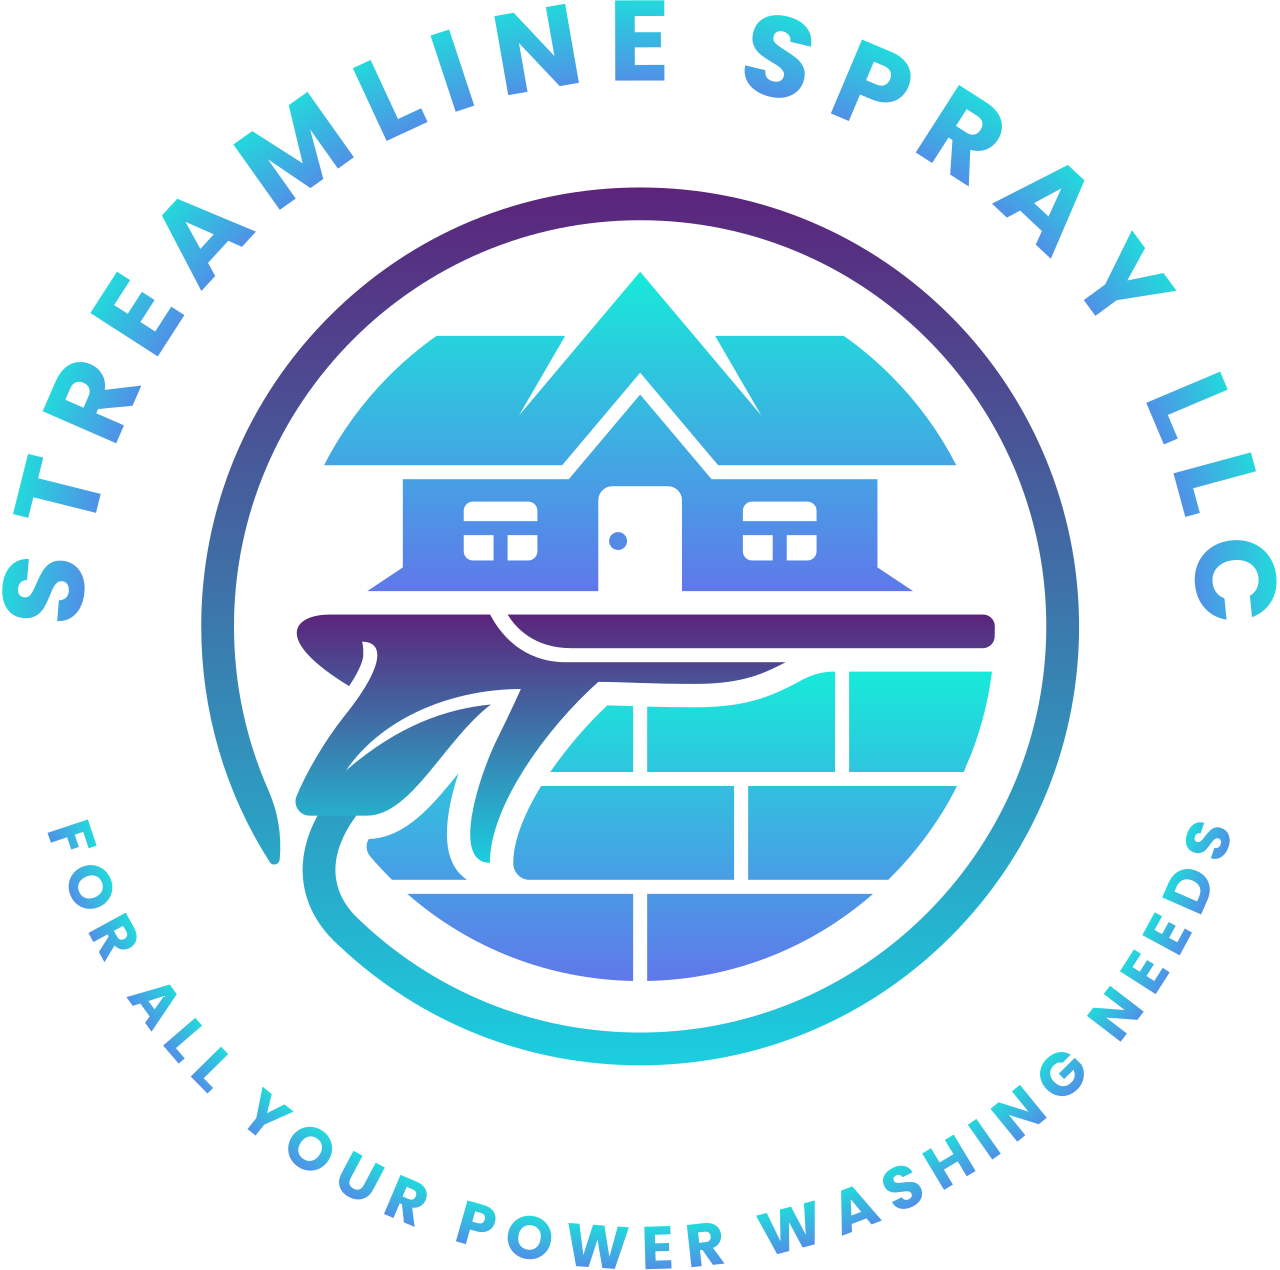 STREAMLINE SPRAY LLC's logo